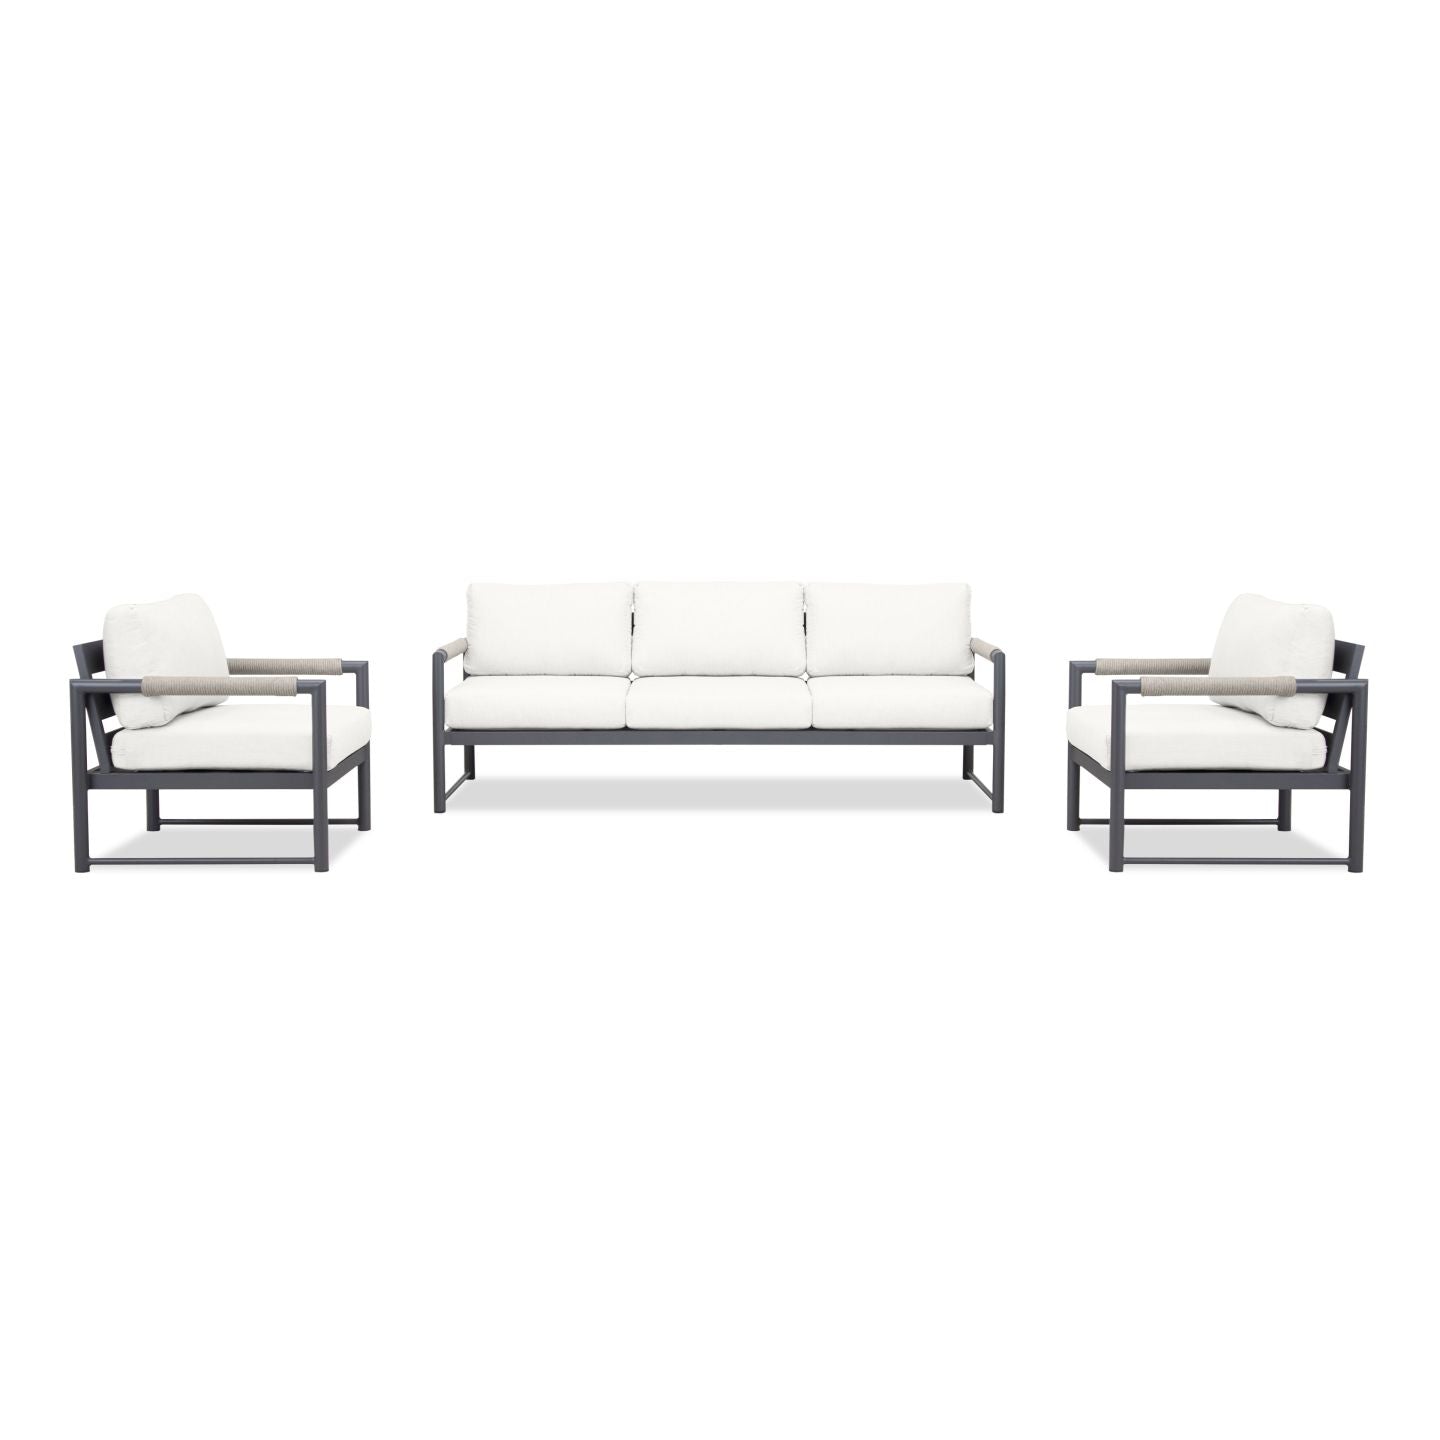 Harmonia Living - Alto 3 Piece Sofa Club Chair Set - Slate/Pebble Gray | ALTO-SL-PG-SET141